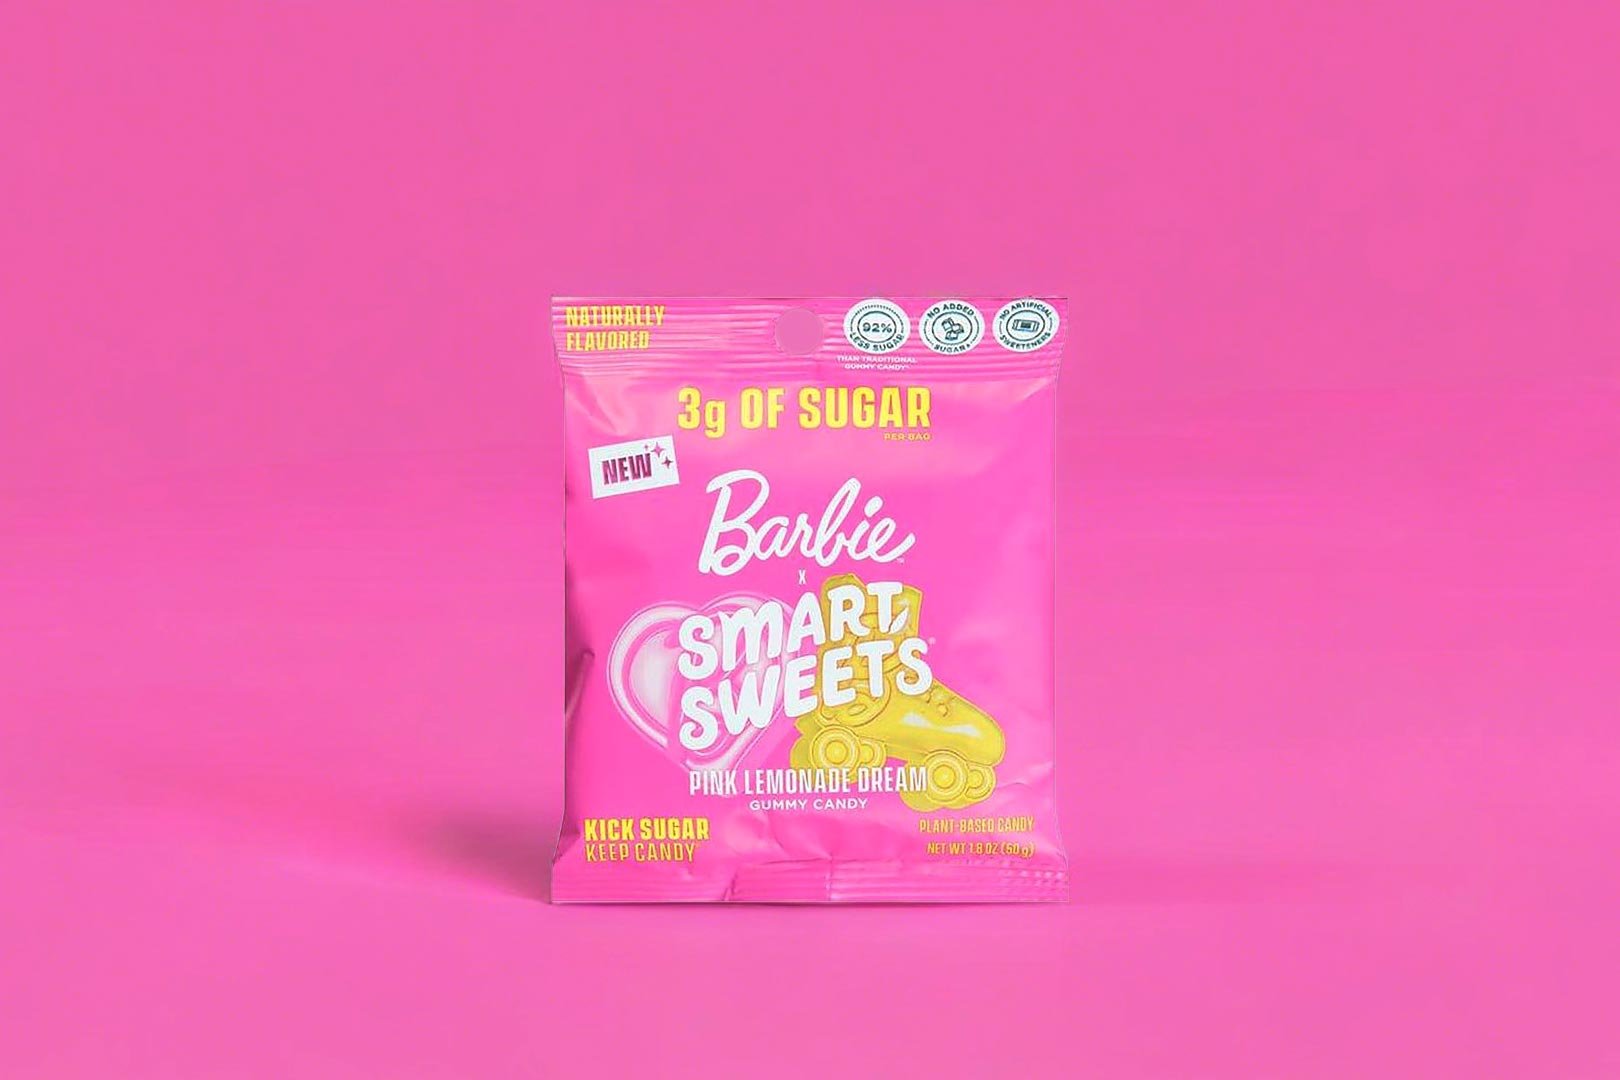 Smartsweets X Barbie Pink Lemonade Dream Candy